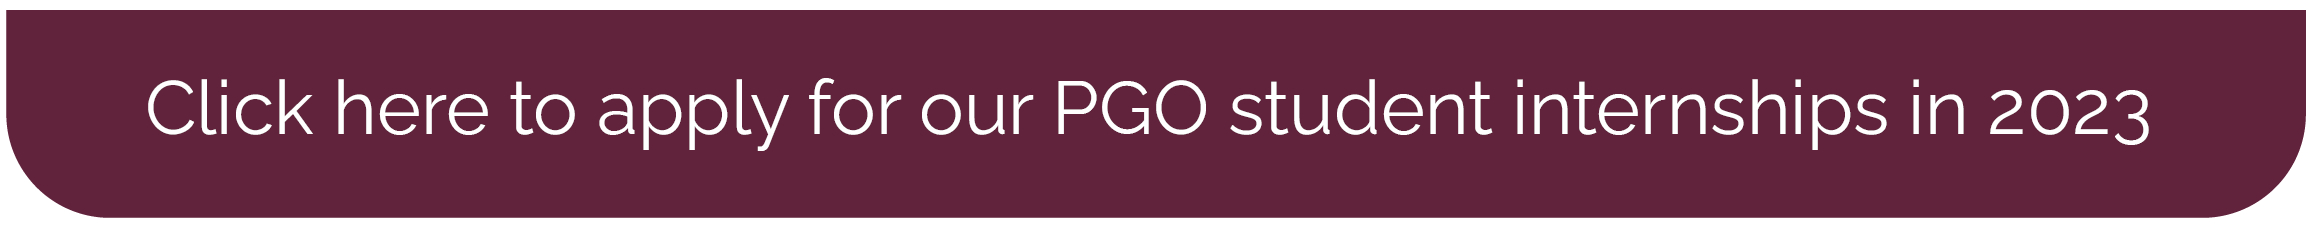 Apply here banner for PGO internships 2023.png